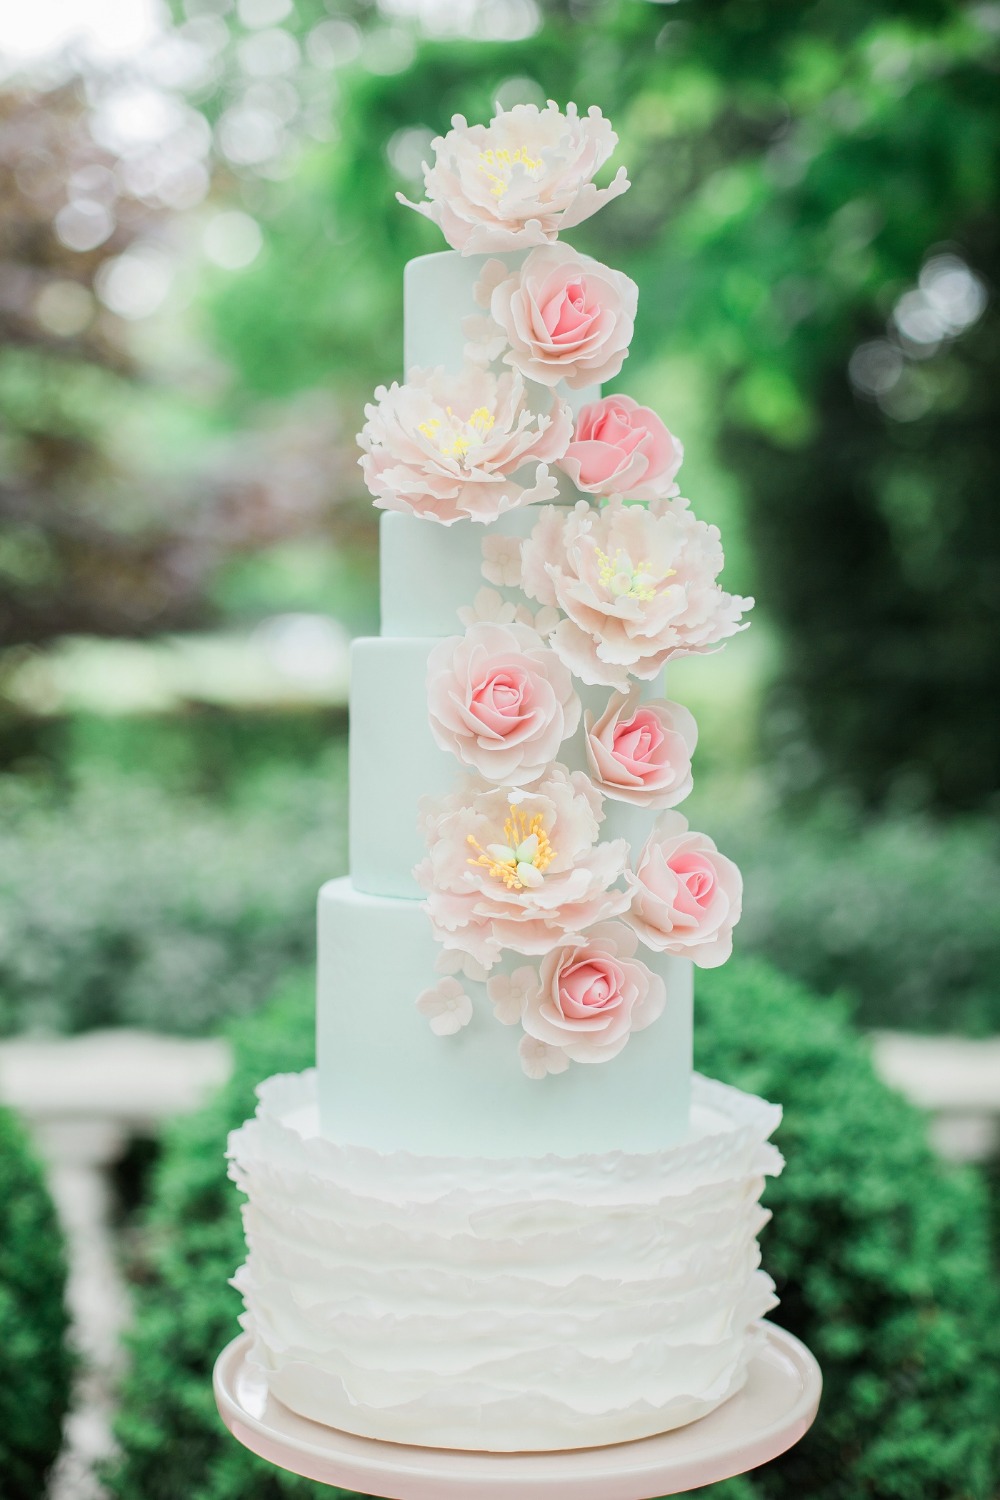 Pantone Serenity & Rose Quartz wedding cake